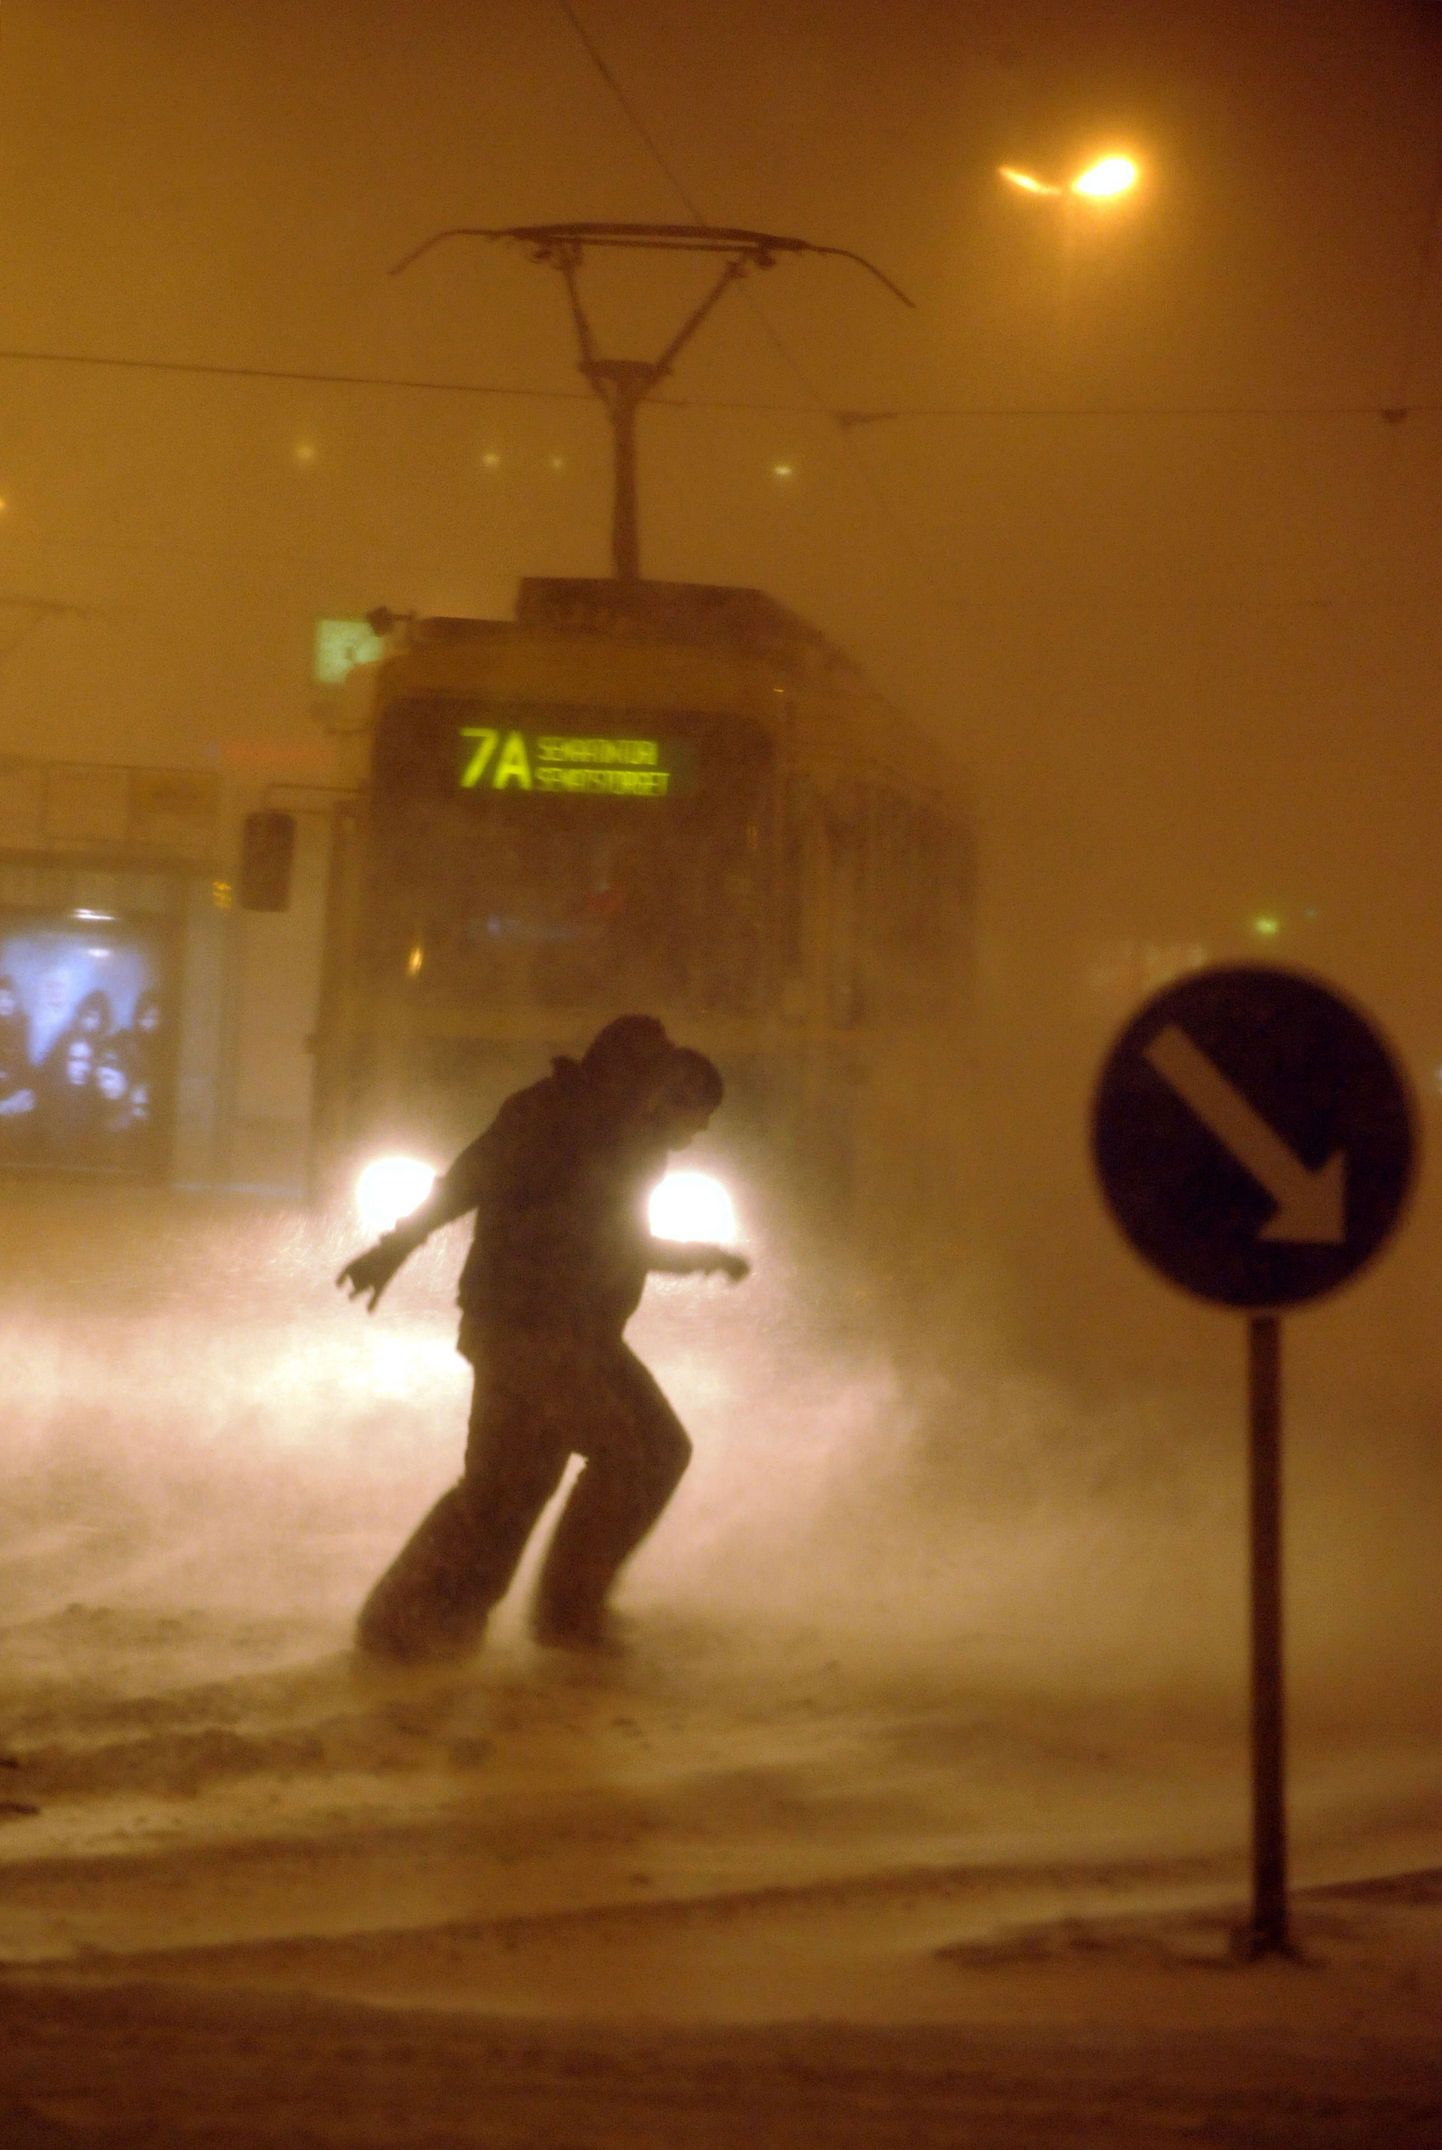 Helsingi tramm läbi lumetormi rühkimas.